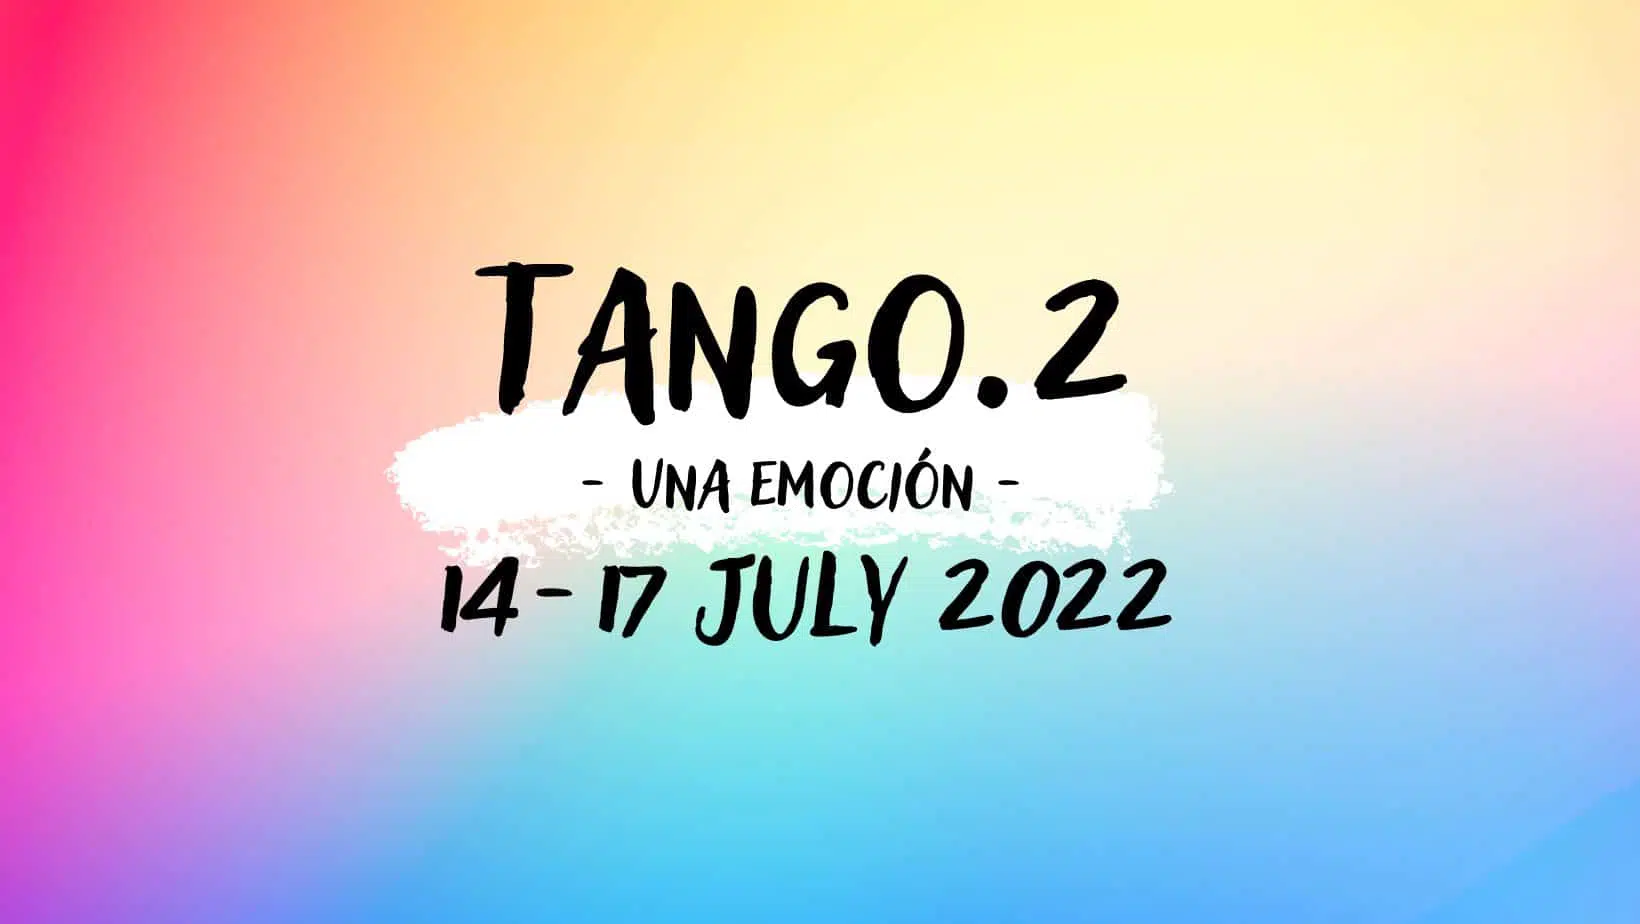 Tango.2 Tango Festival 2022 - Una emoción preview picture